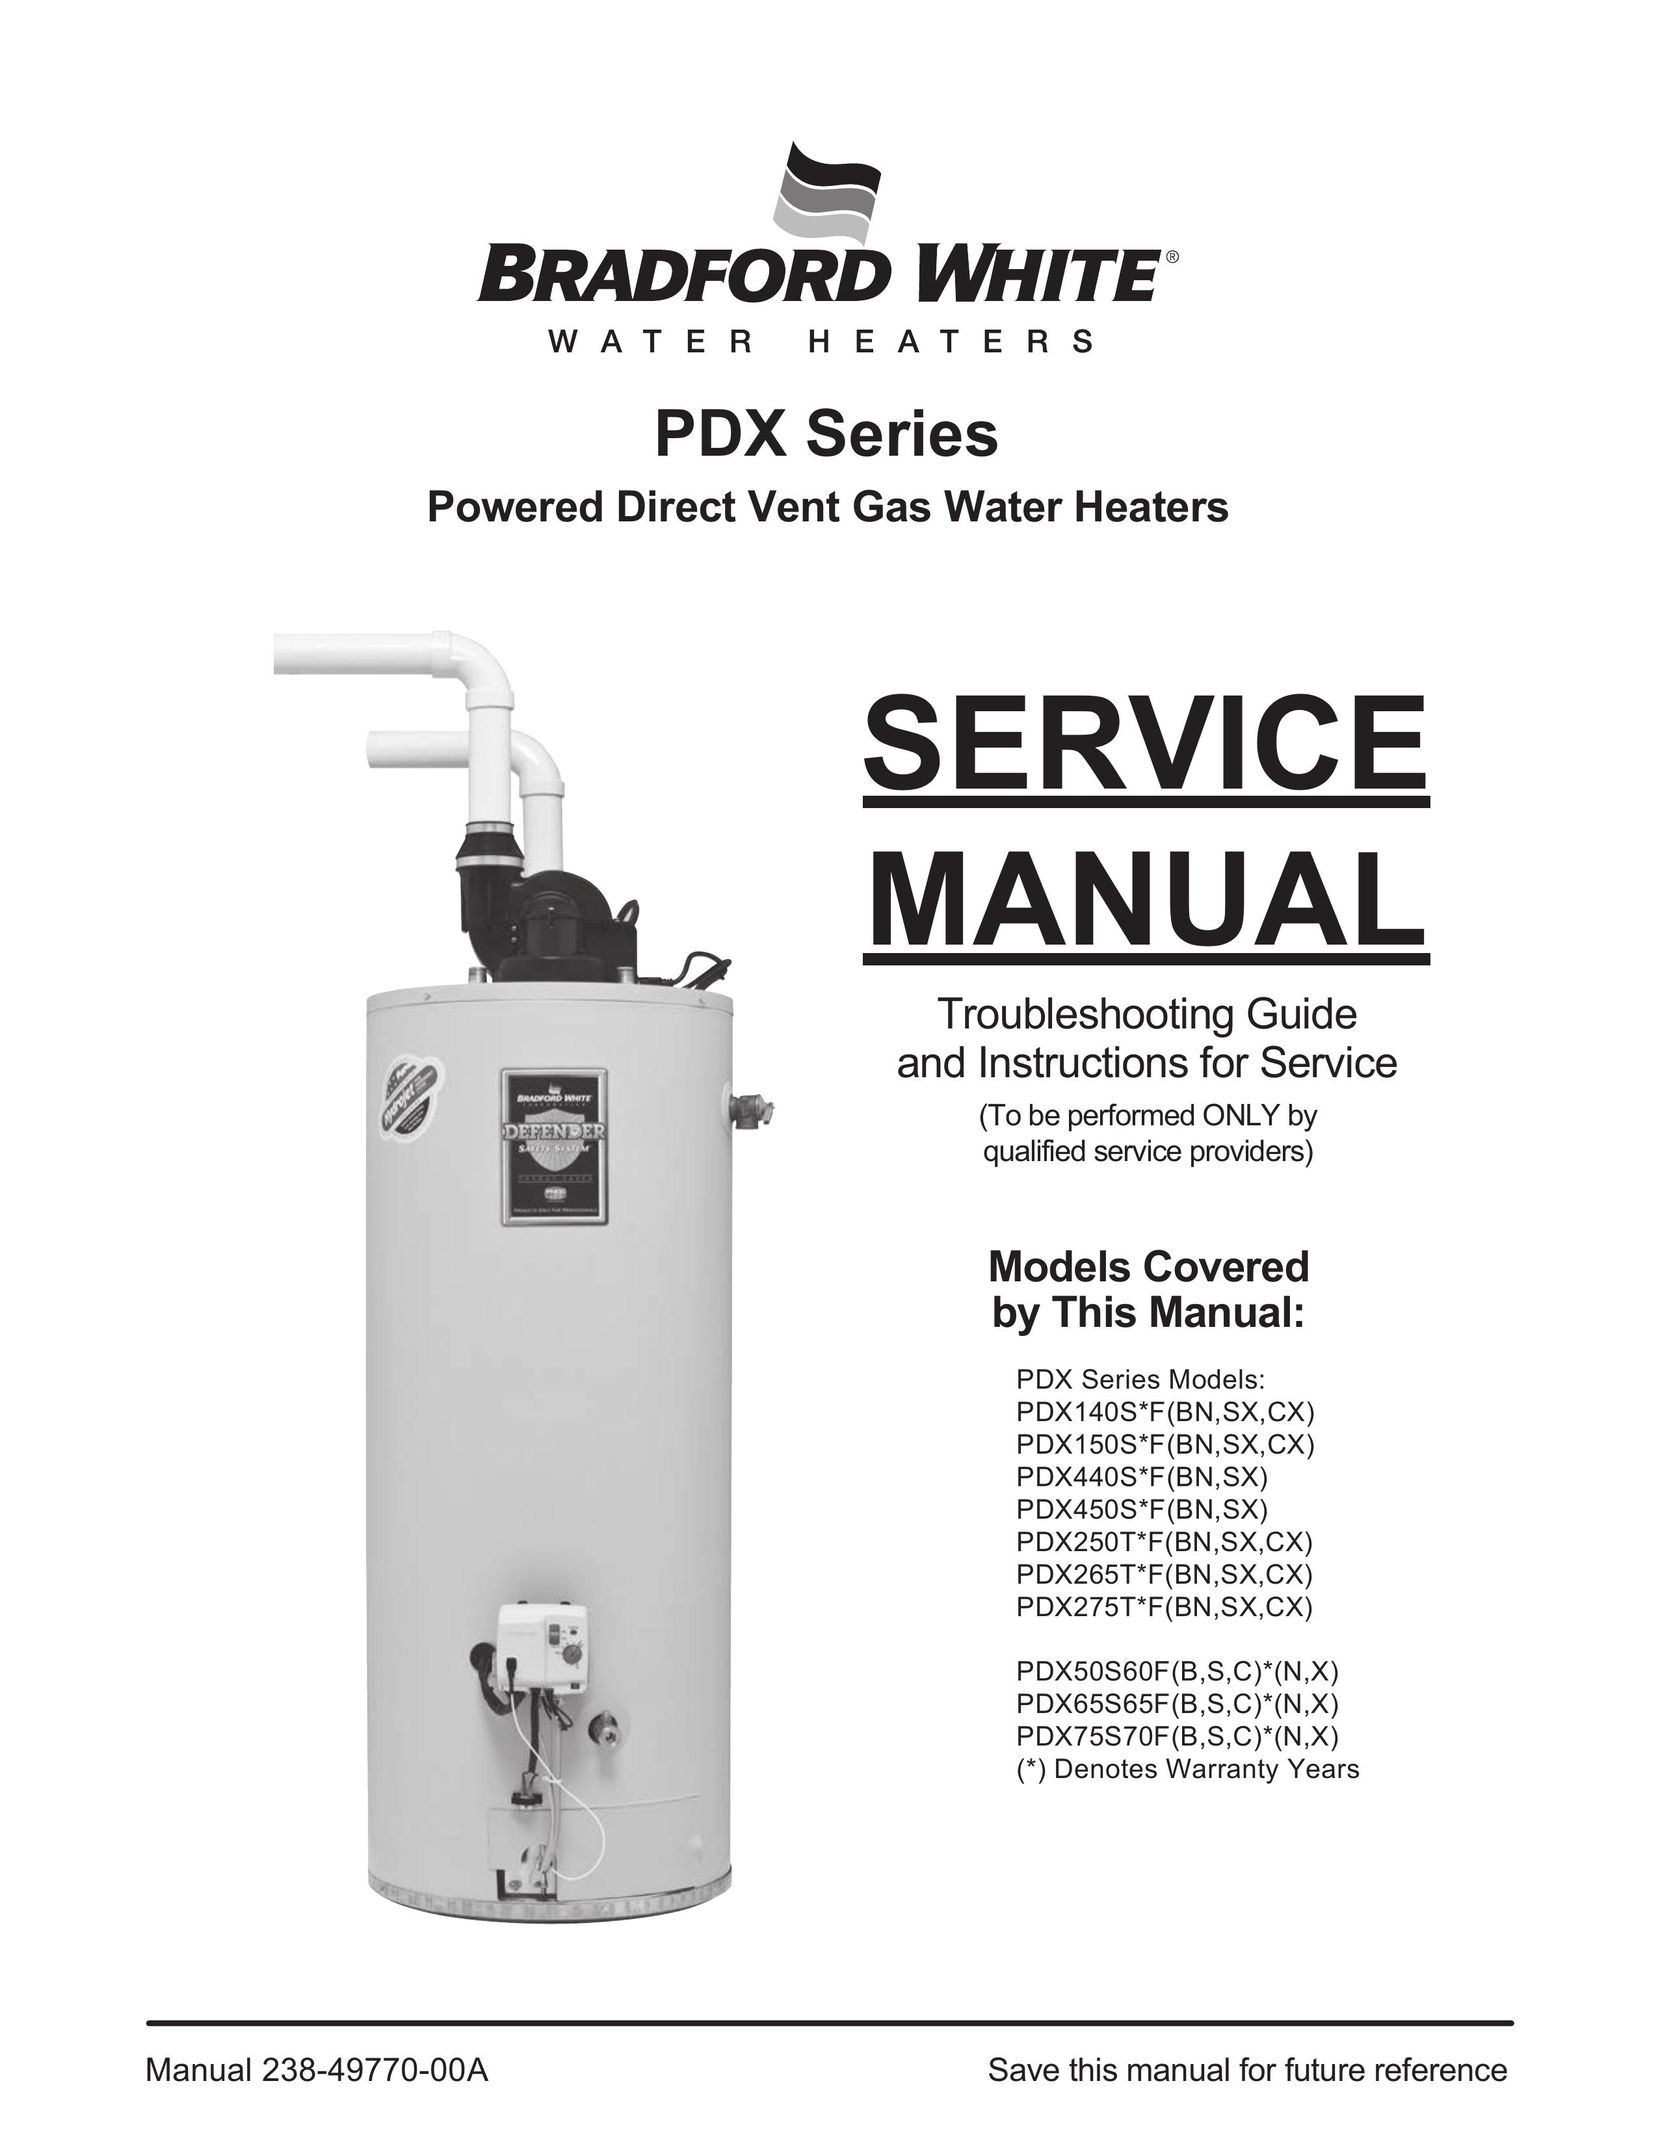 Honeywell PDX450S*F(BN,SX) Water Heater User Manual